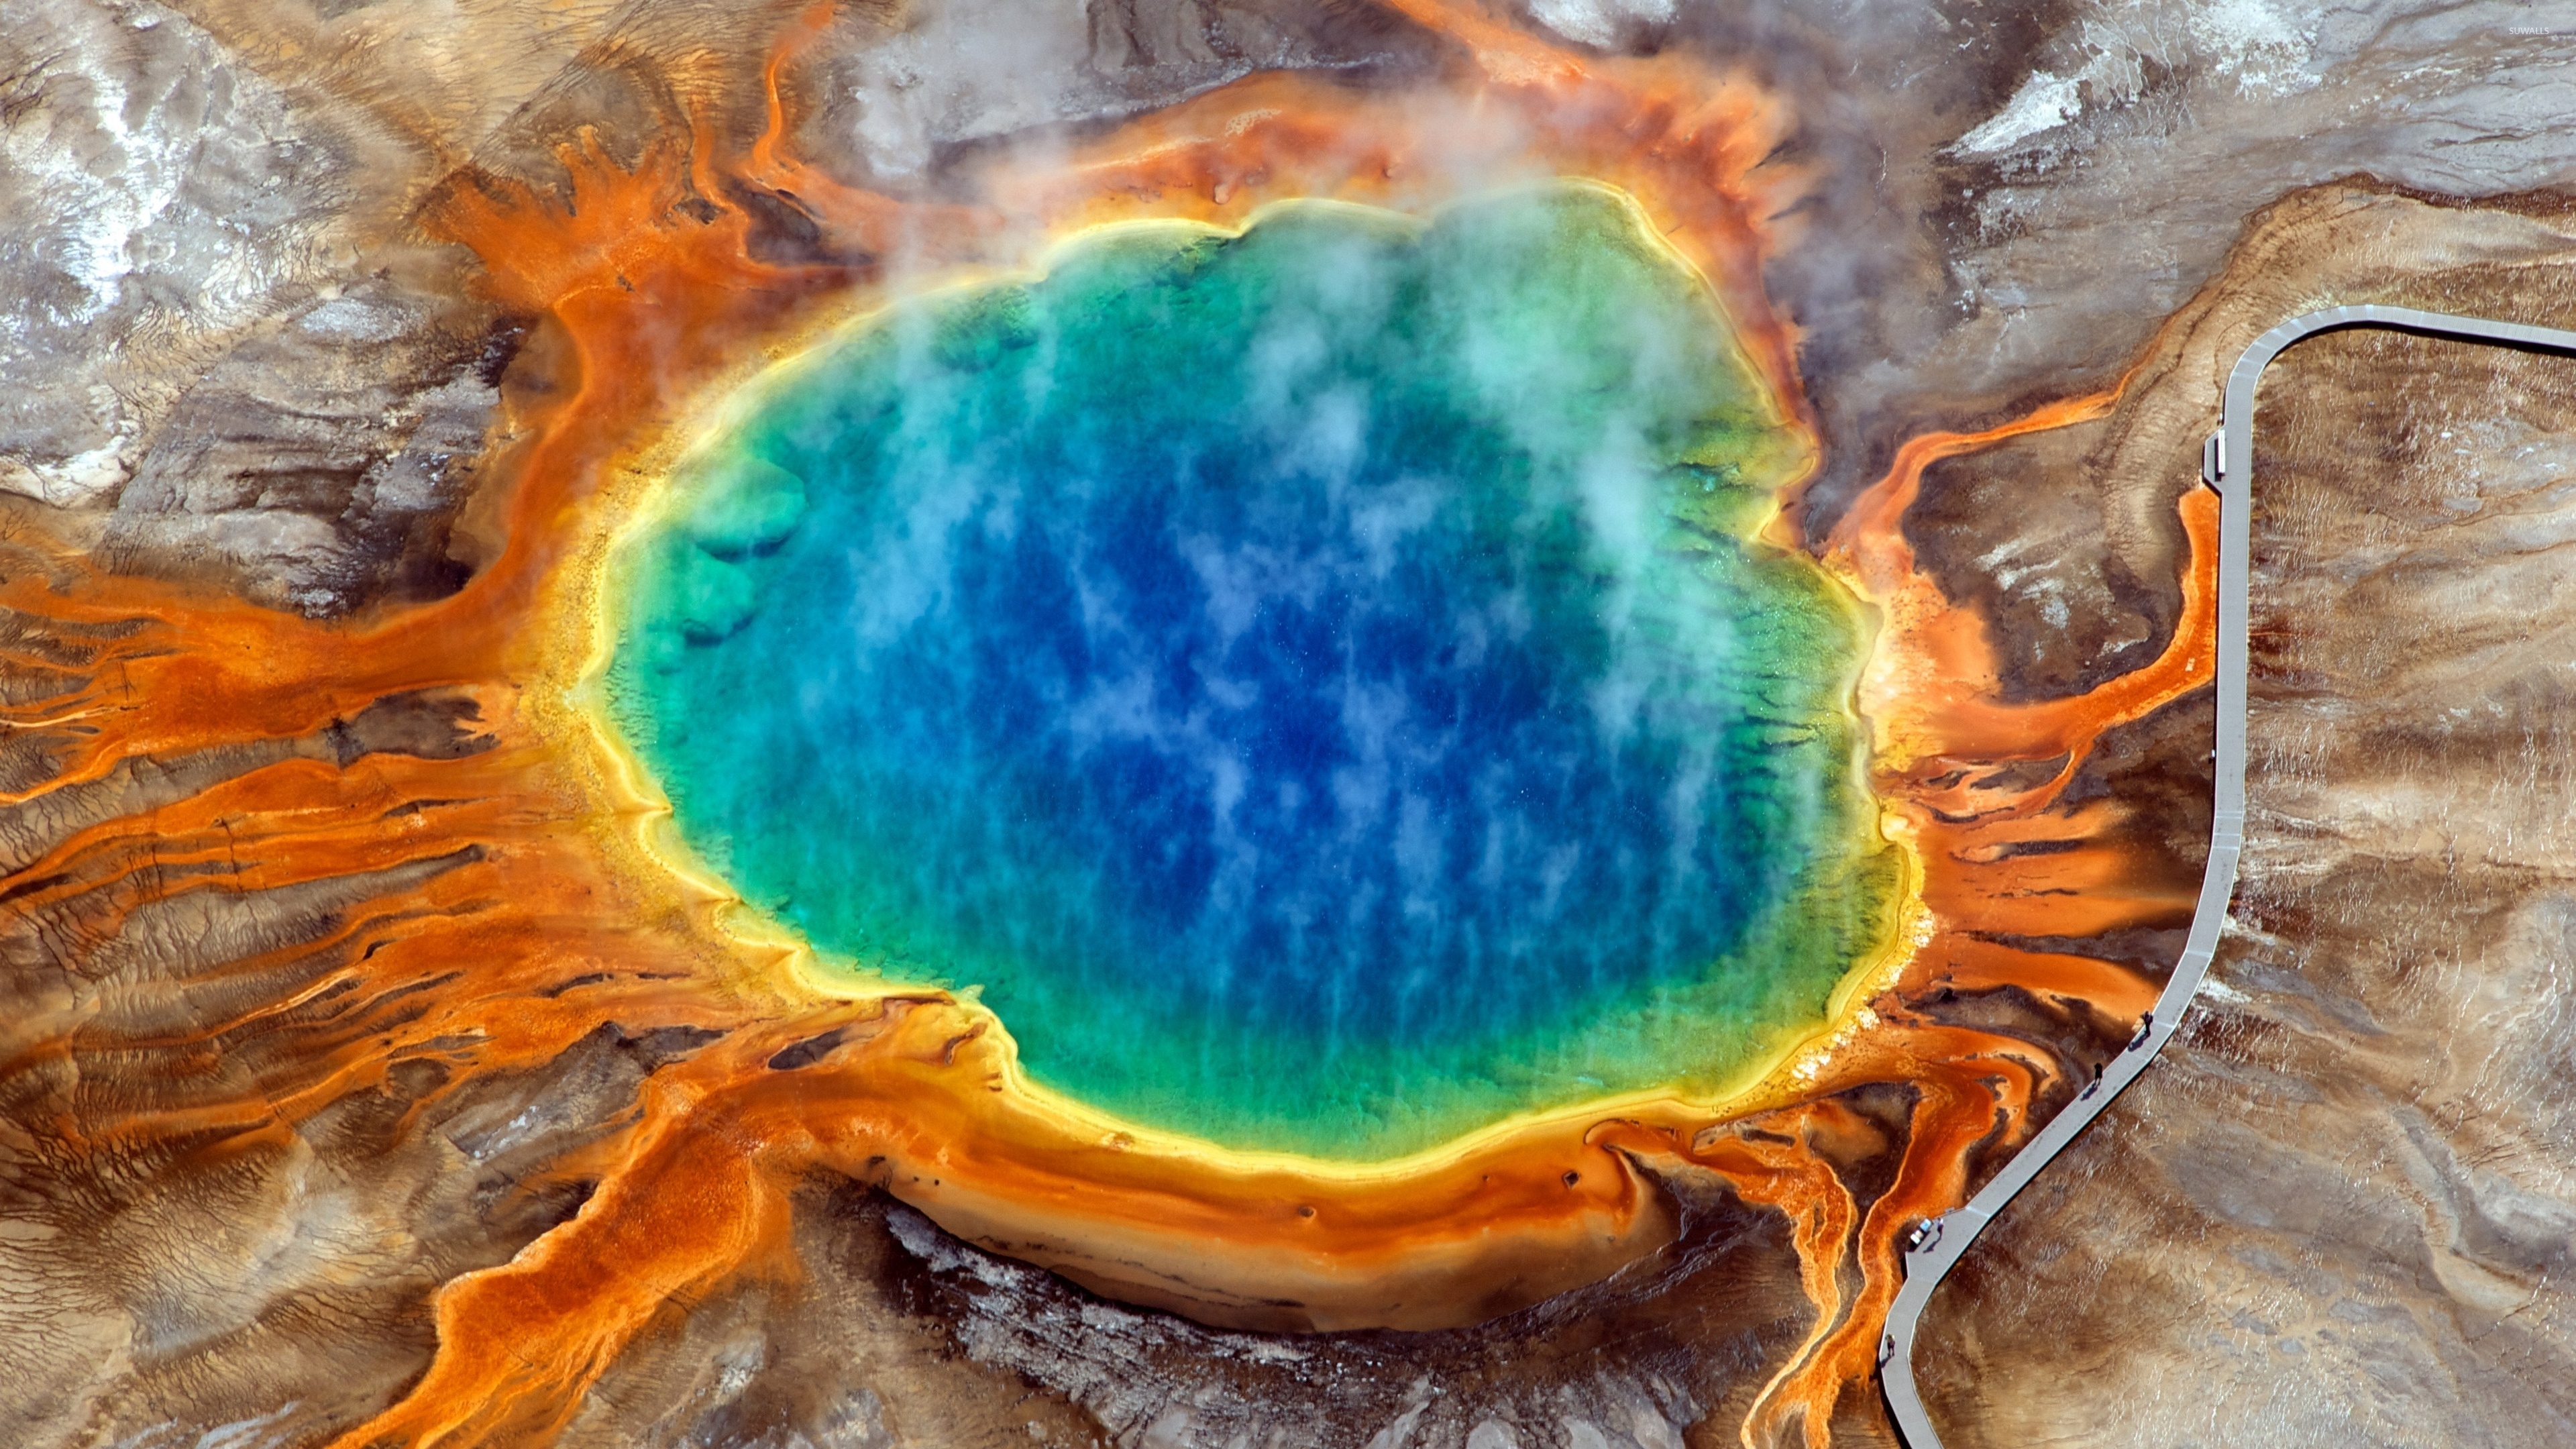 Yellowstone National Park, Grand prismatic spring, Nature's marvel, Wallpaper wonder, 3840x2160 4K Desktop